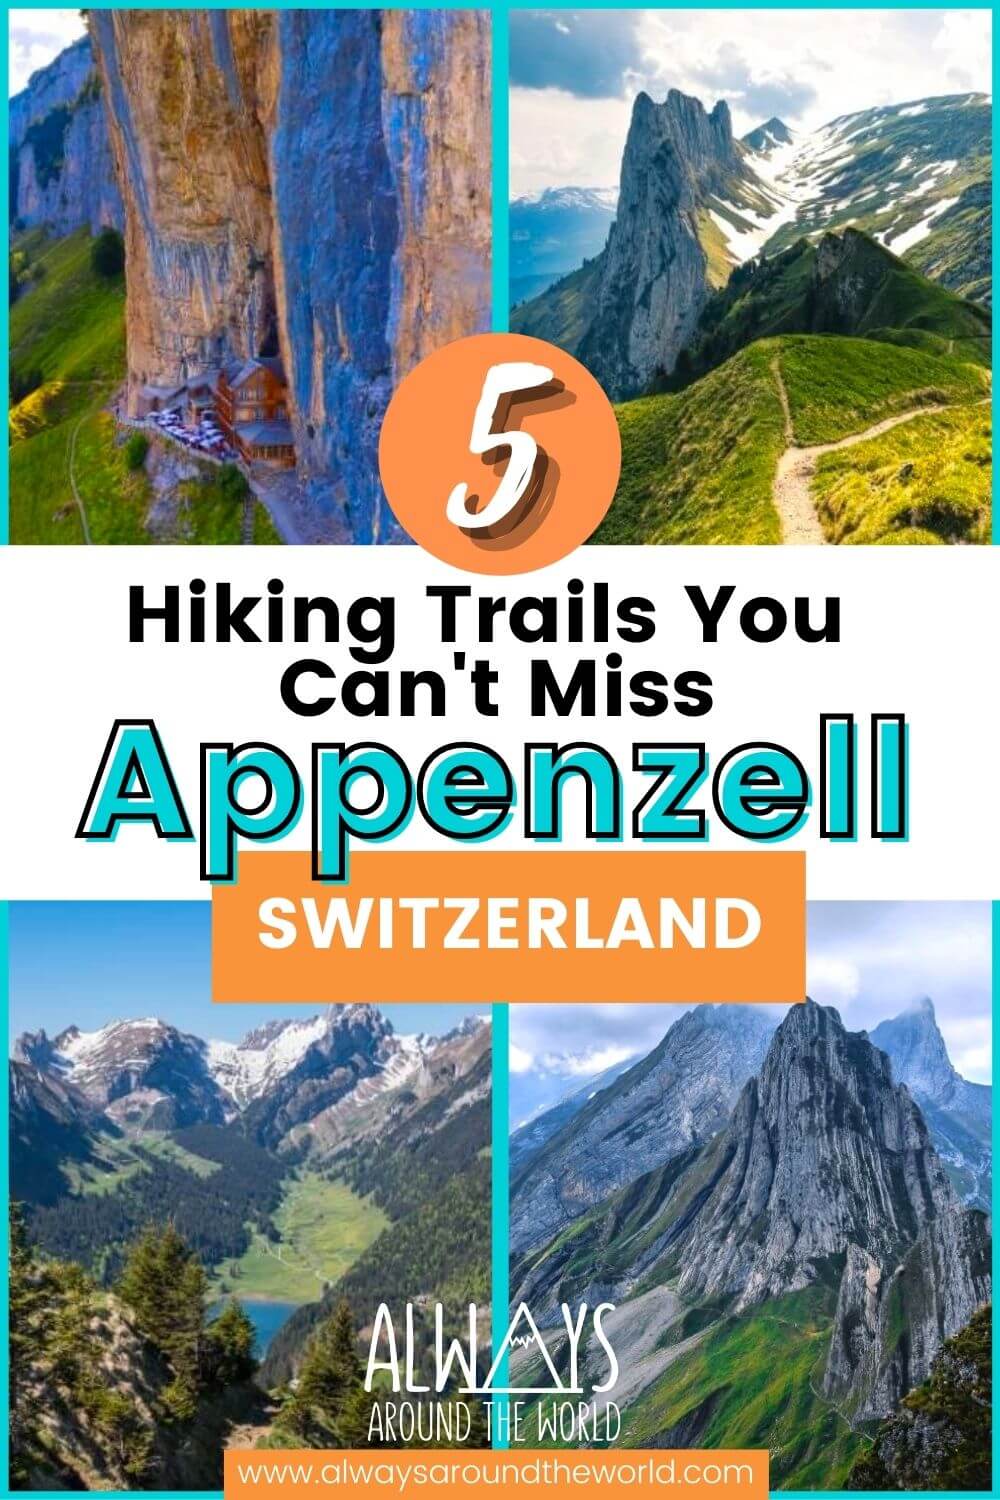 Appenzell Hiking Trials (1)